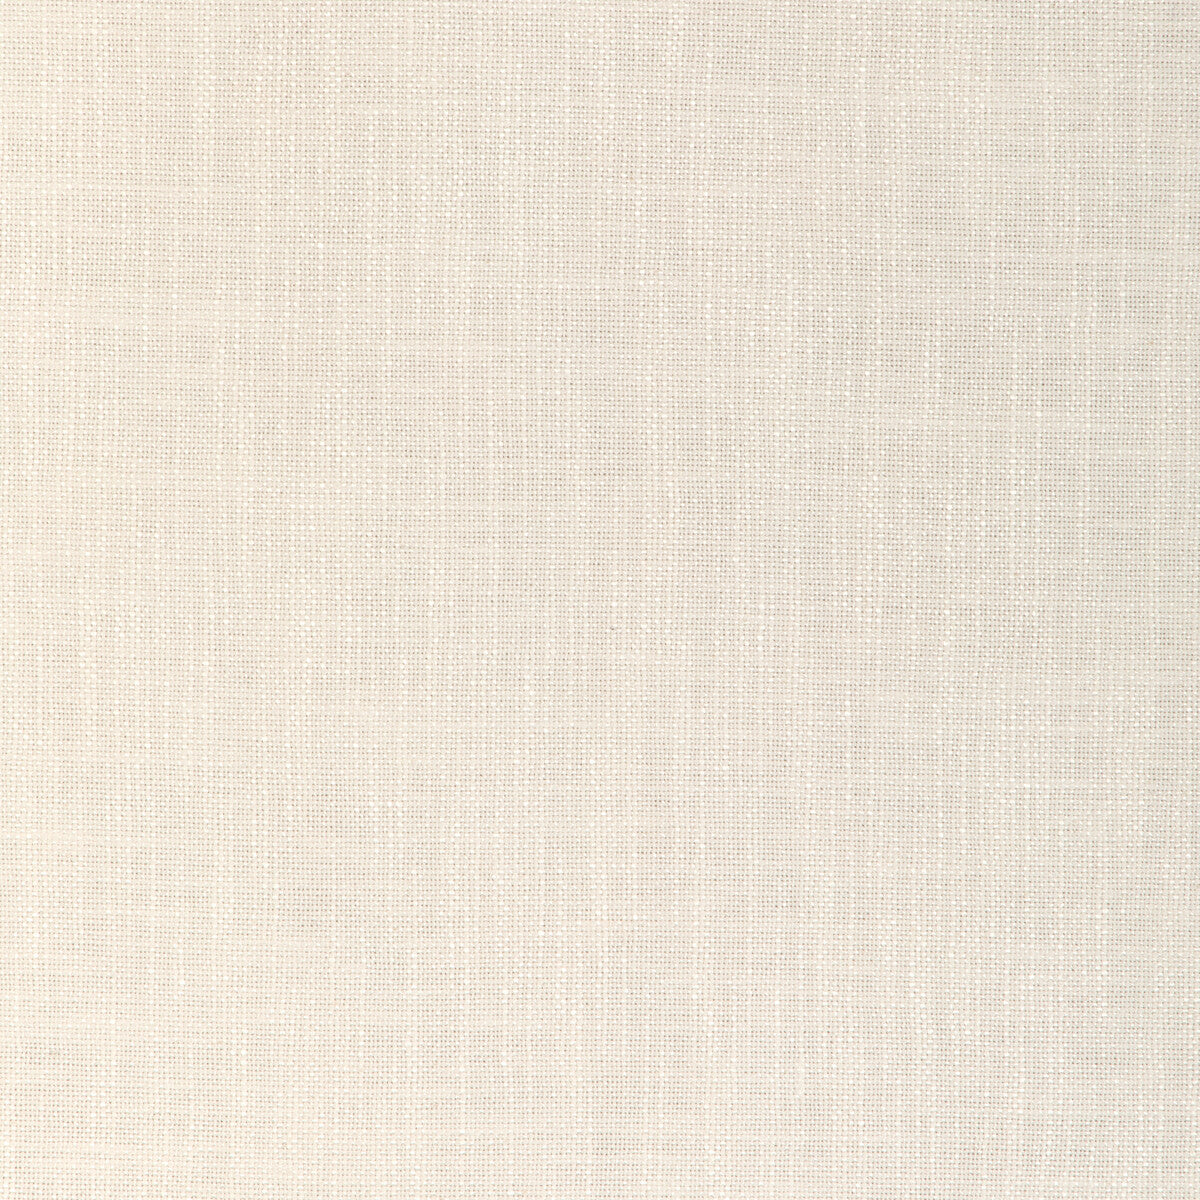 Kravet Smart fabric in 36672-1 color - pattern 36672.1.0 - by Kravet Smart in the Performance Kravetarmor collection